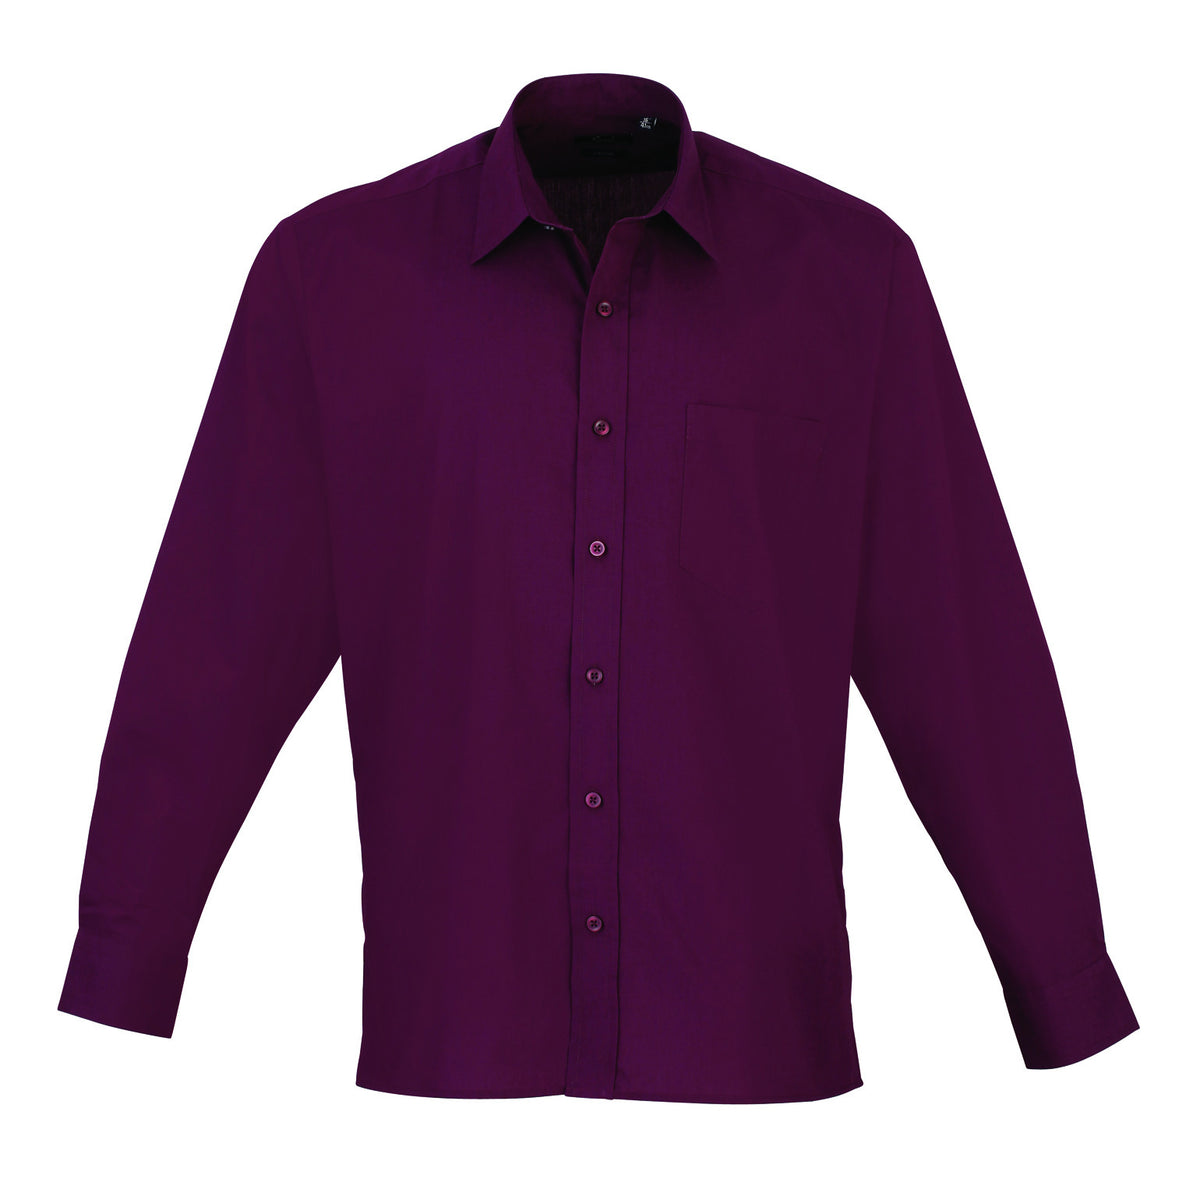 Premier Poplin Shirts (Navy, Lilac, Purple, Violet, Aubergine) - peterdrew.com
 - 6